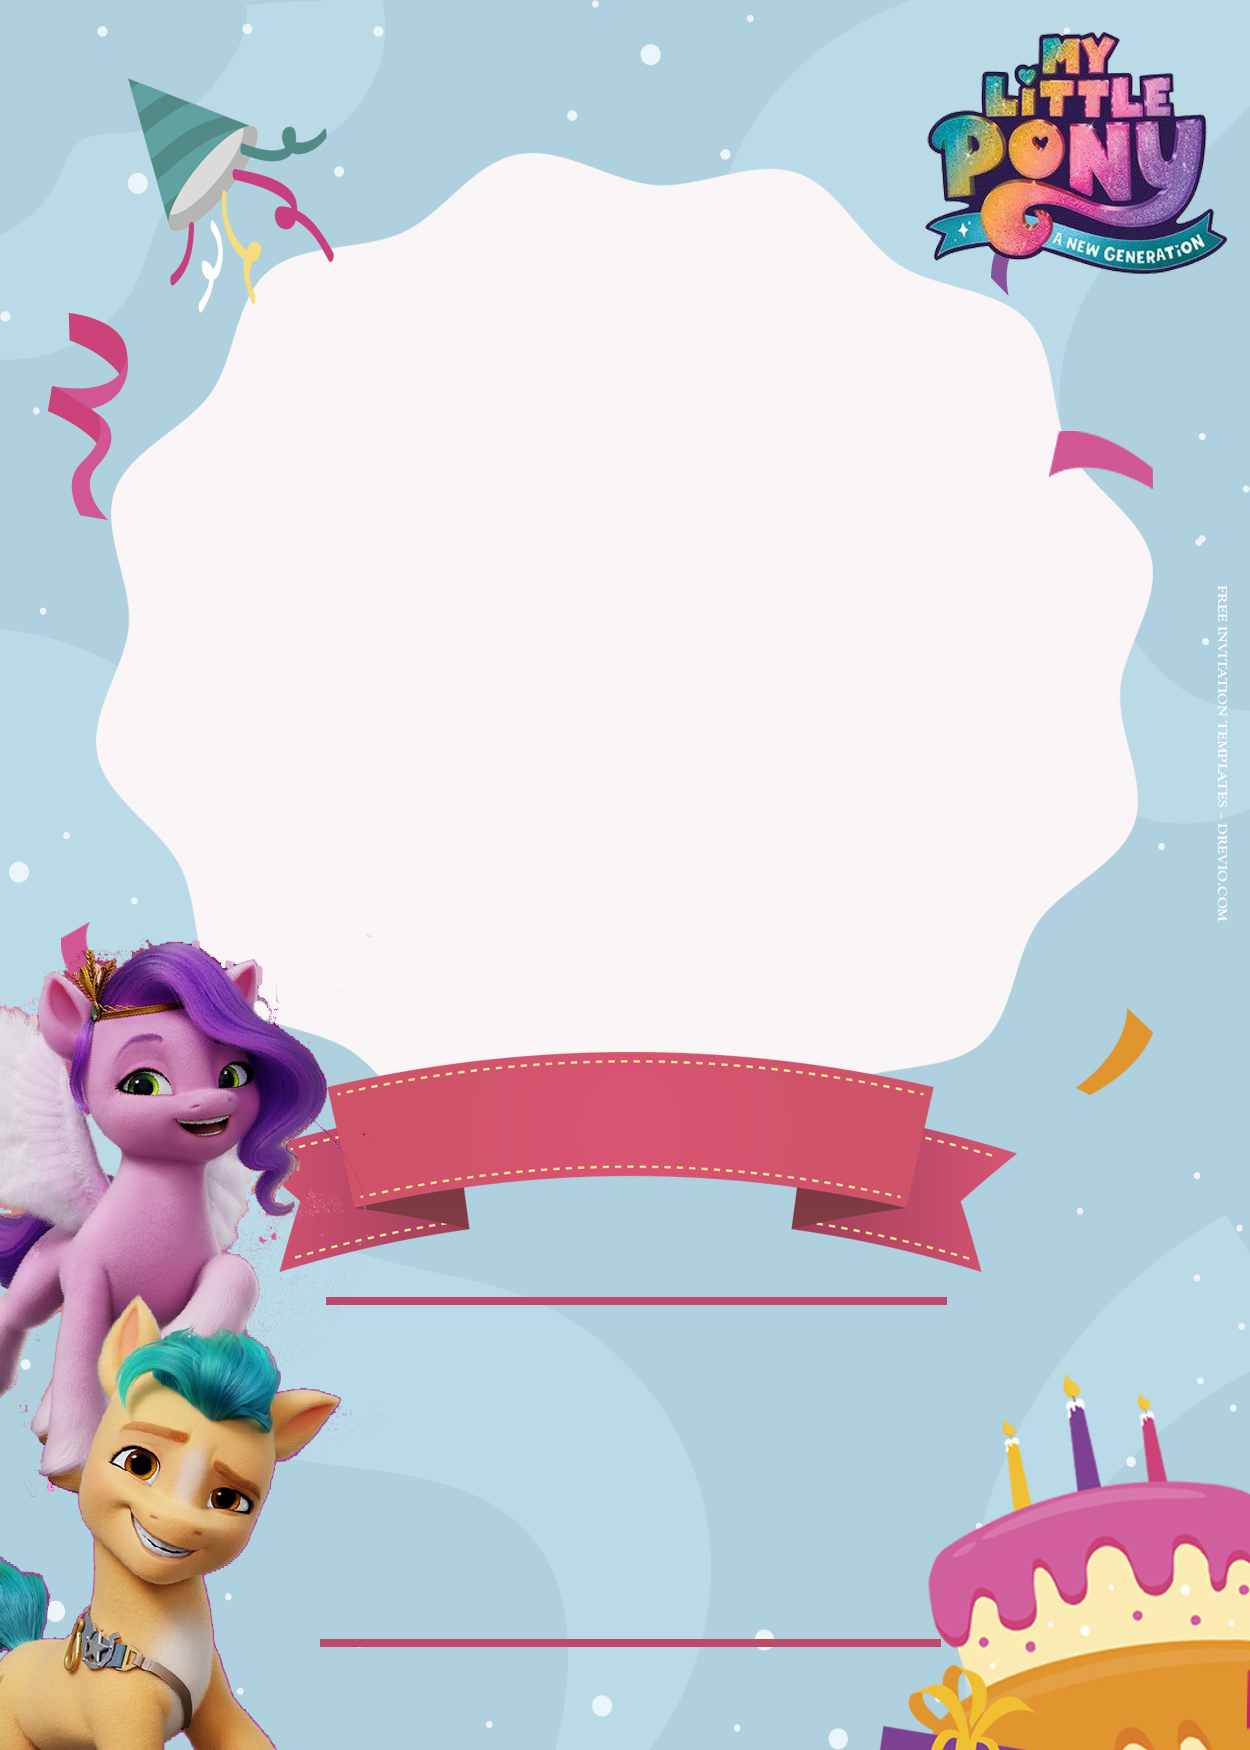 7+ My Little Pony The Next Generation Birthday Invitation Templates One